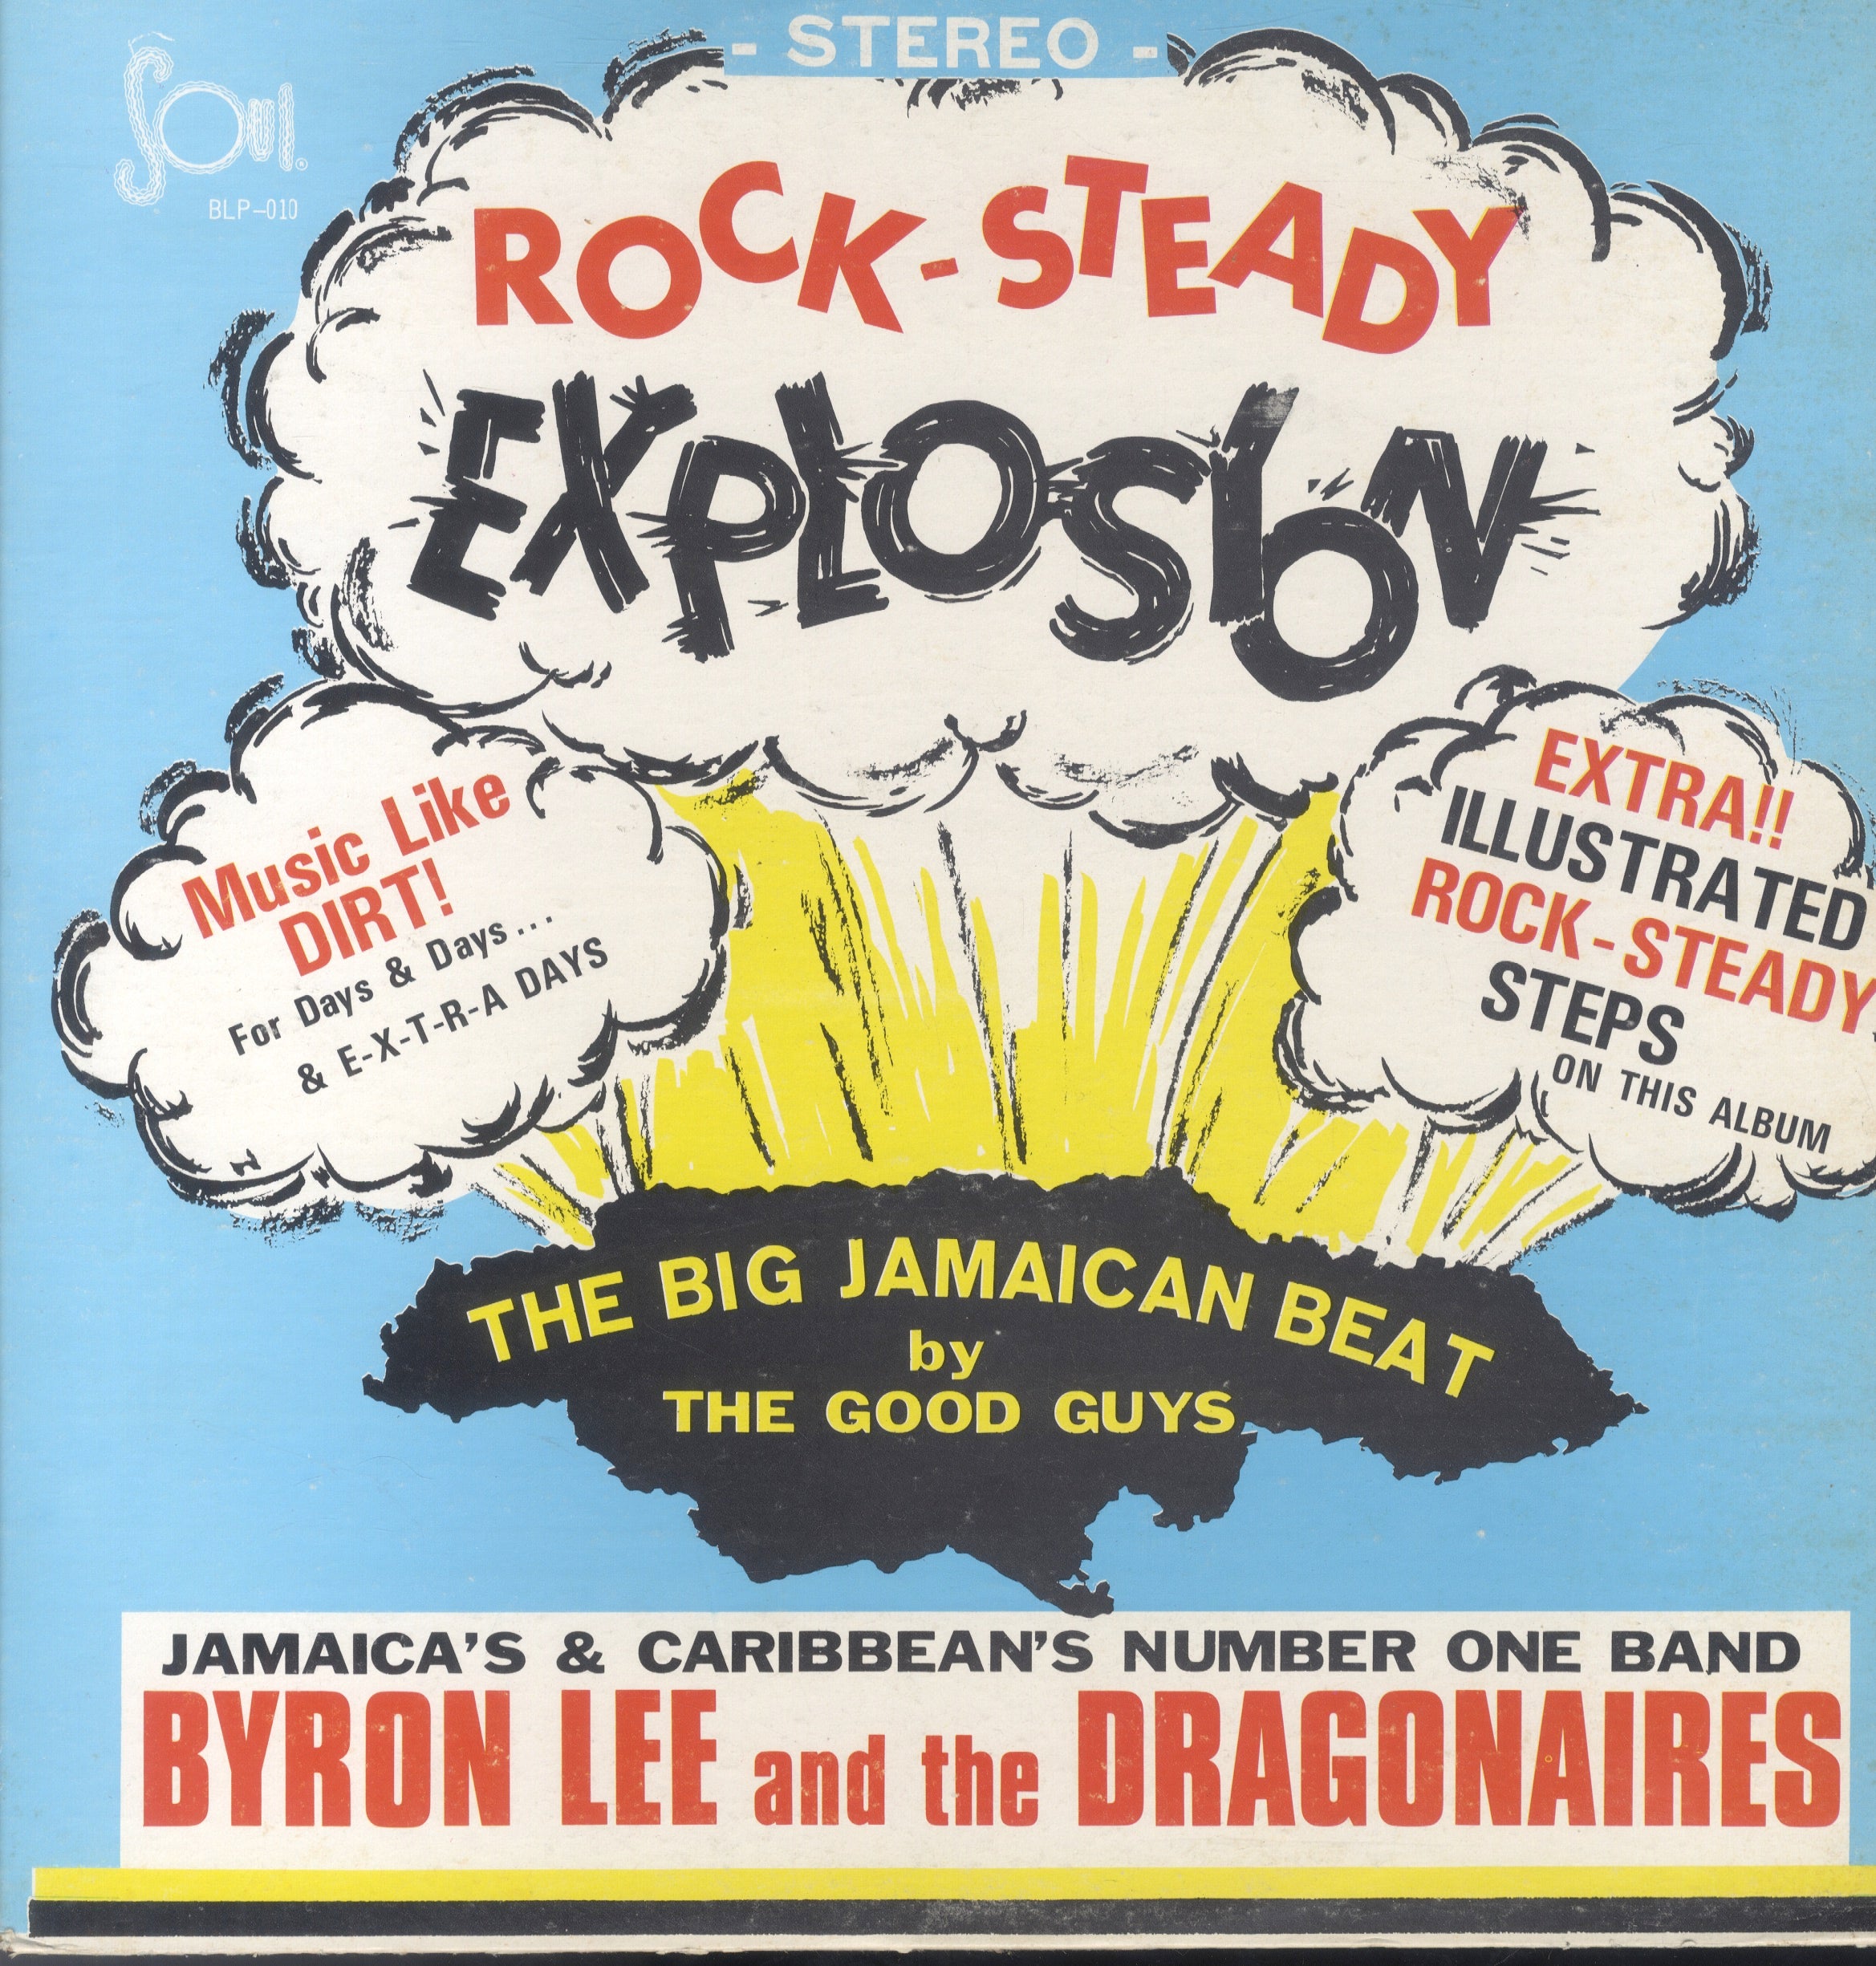 BYRON LEE & THE DRAGONAIRES [Rock-Steady Explosion]